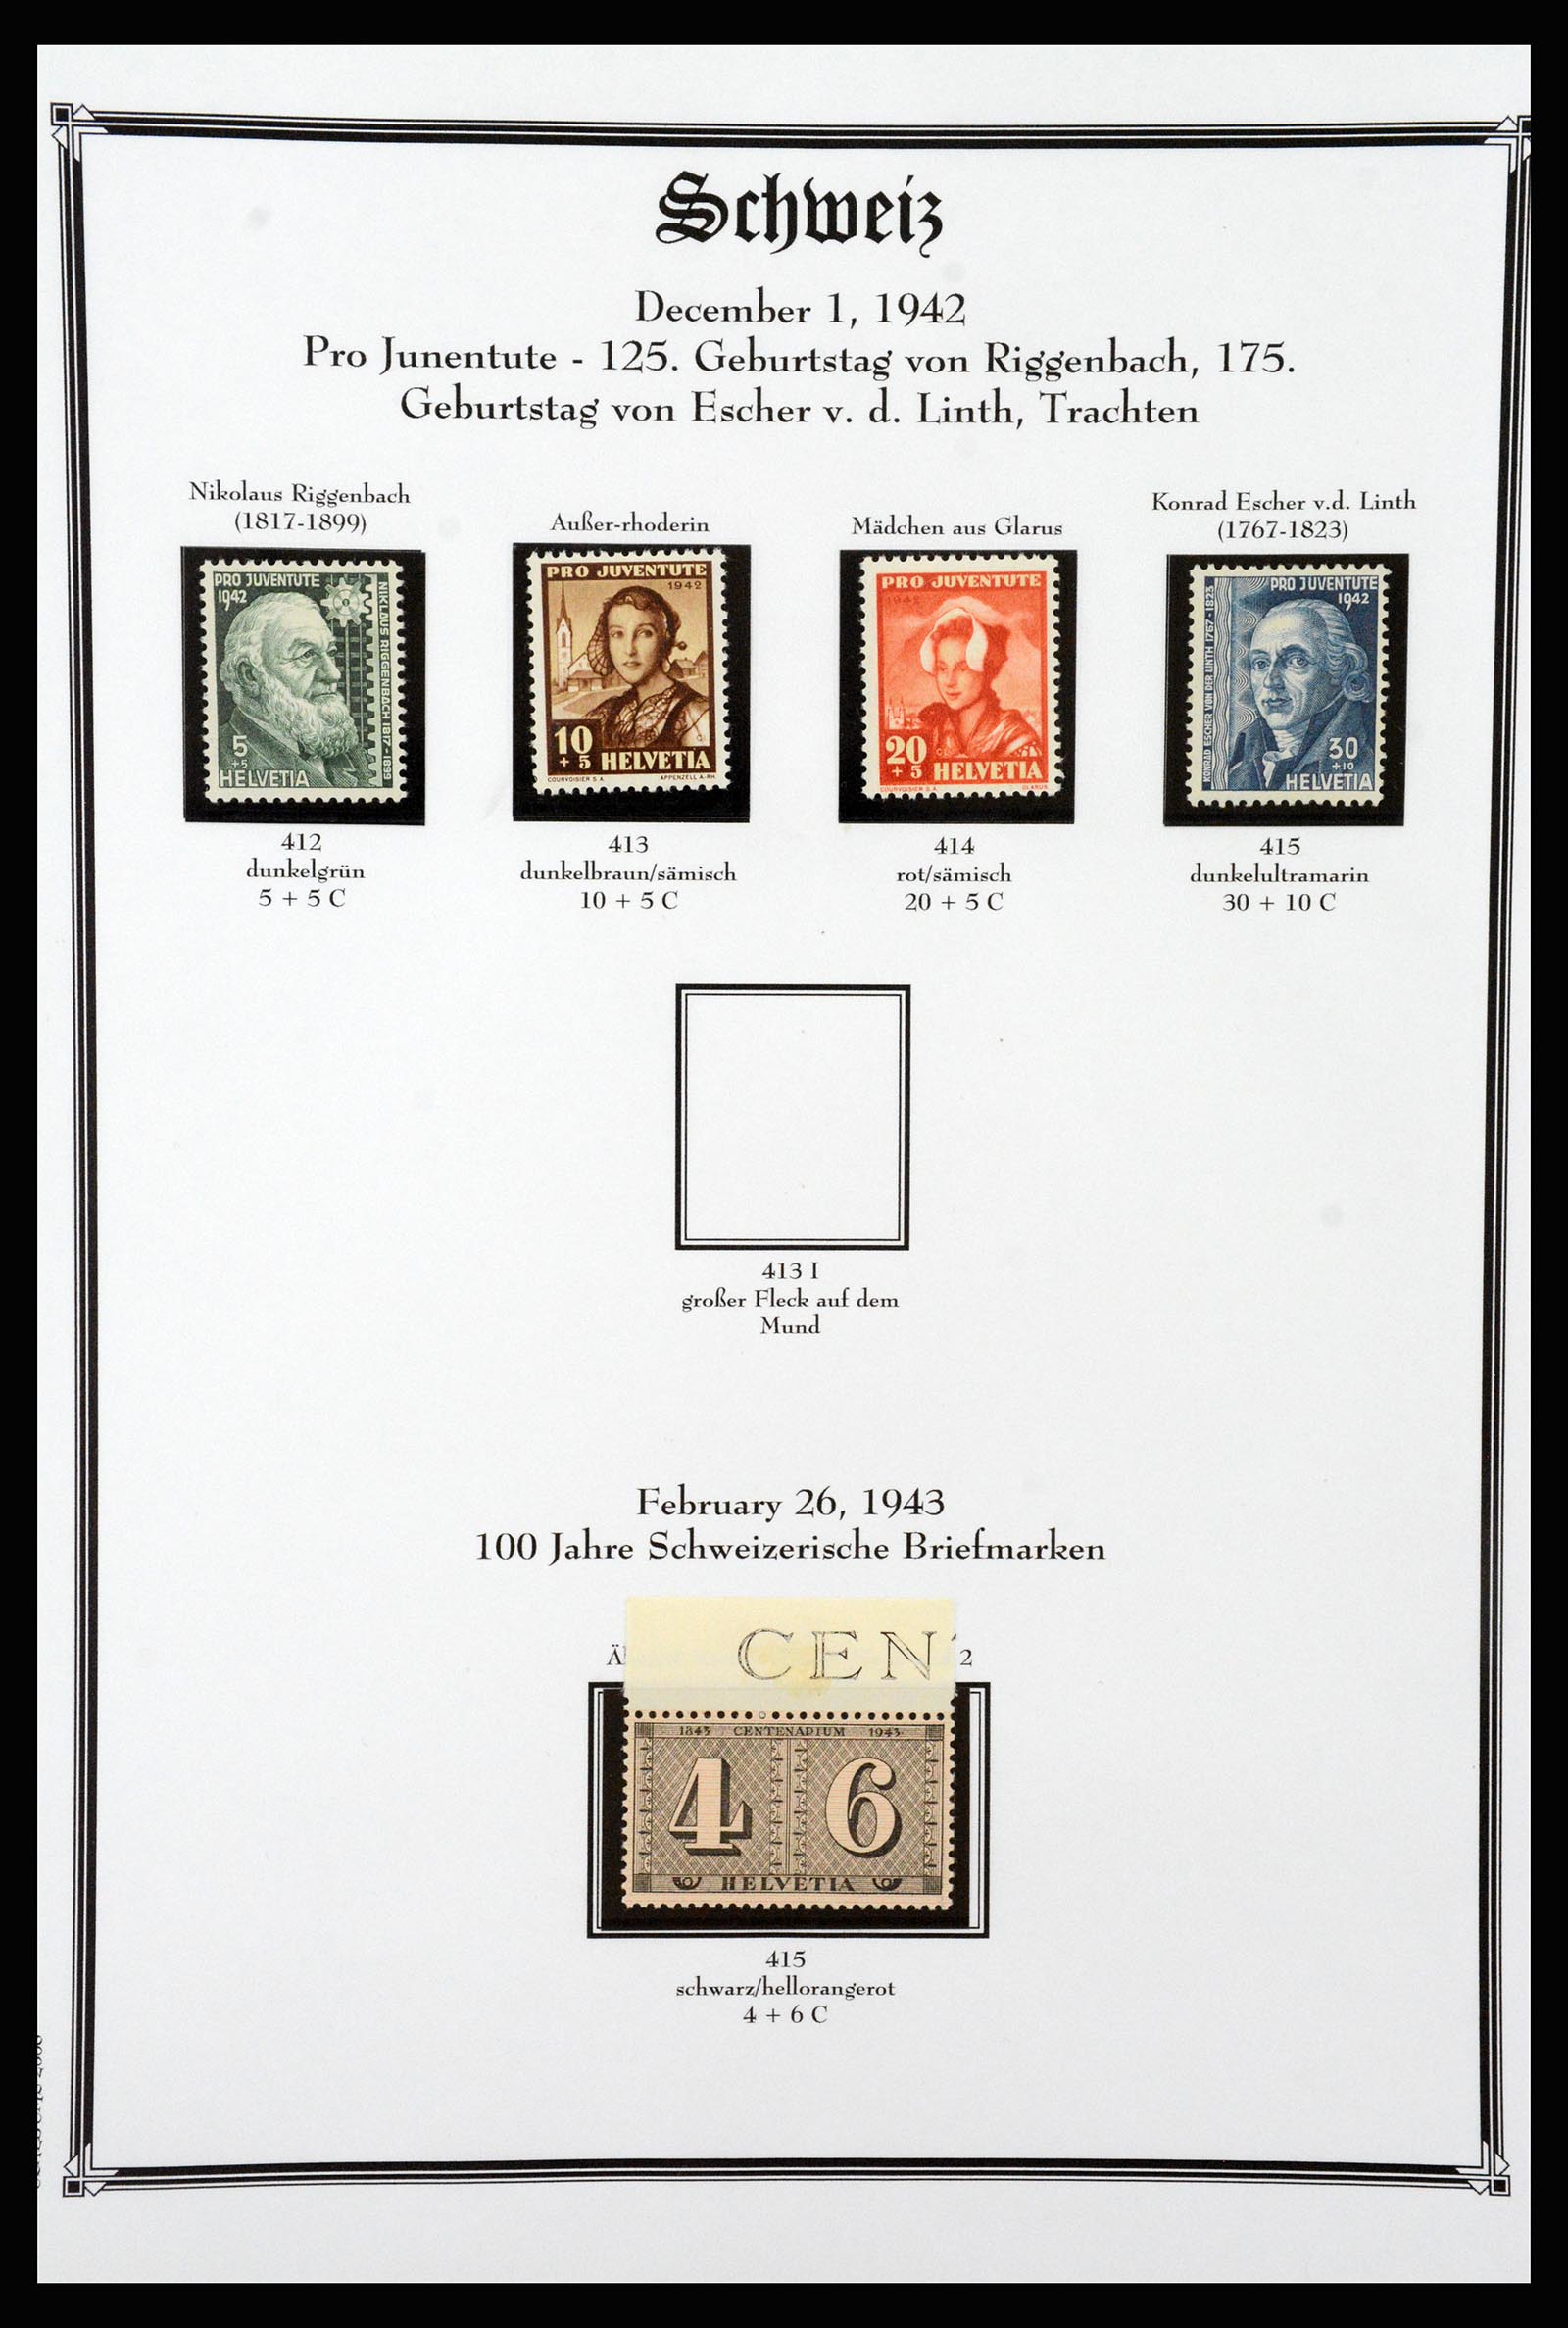 37159 076 - Stamp collection 37159 Switzerland 1862-2000.